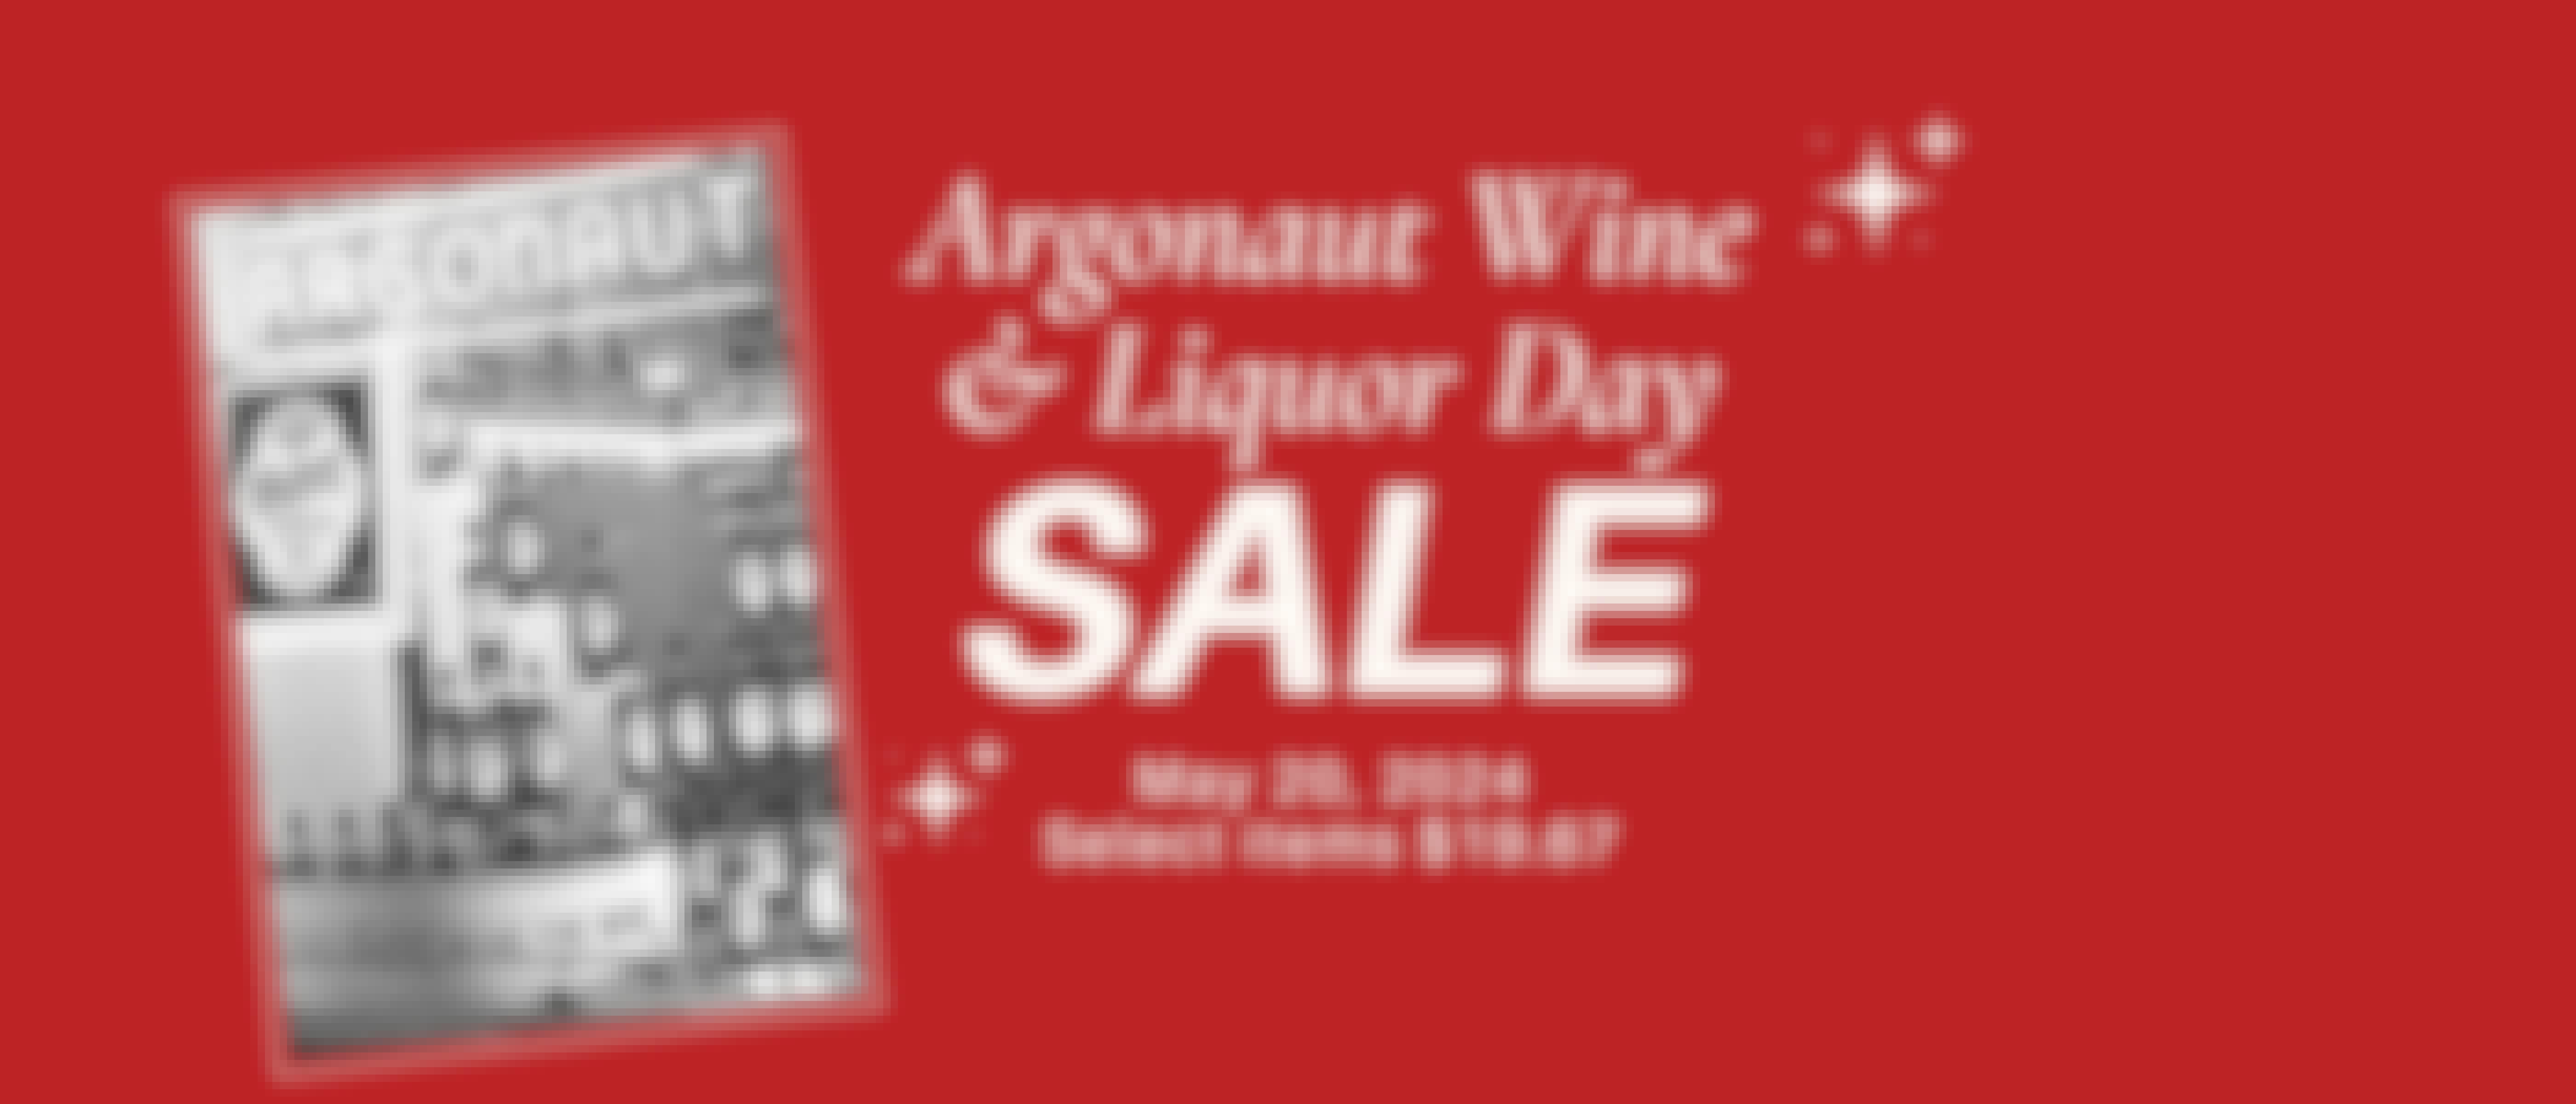 Argonaut Wine & Liquor Day Sale